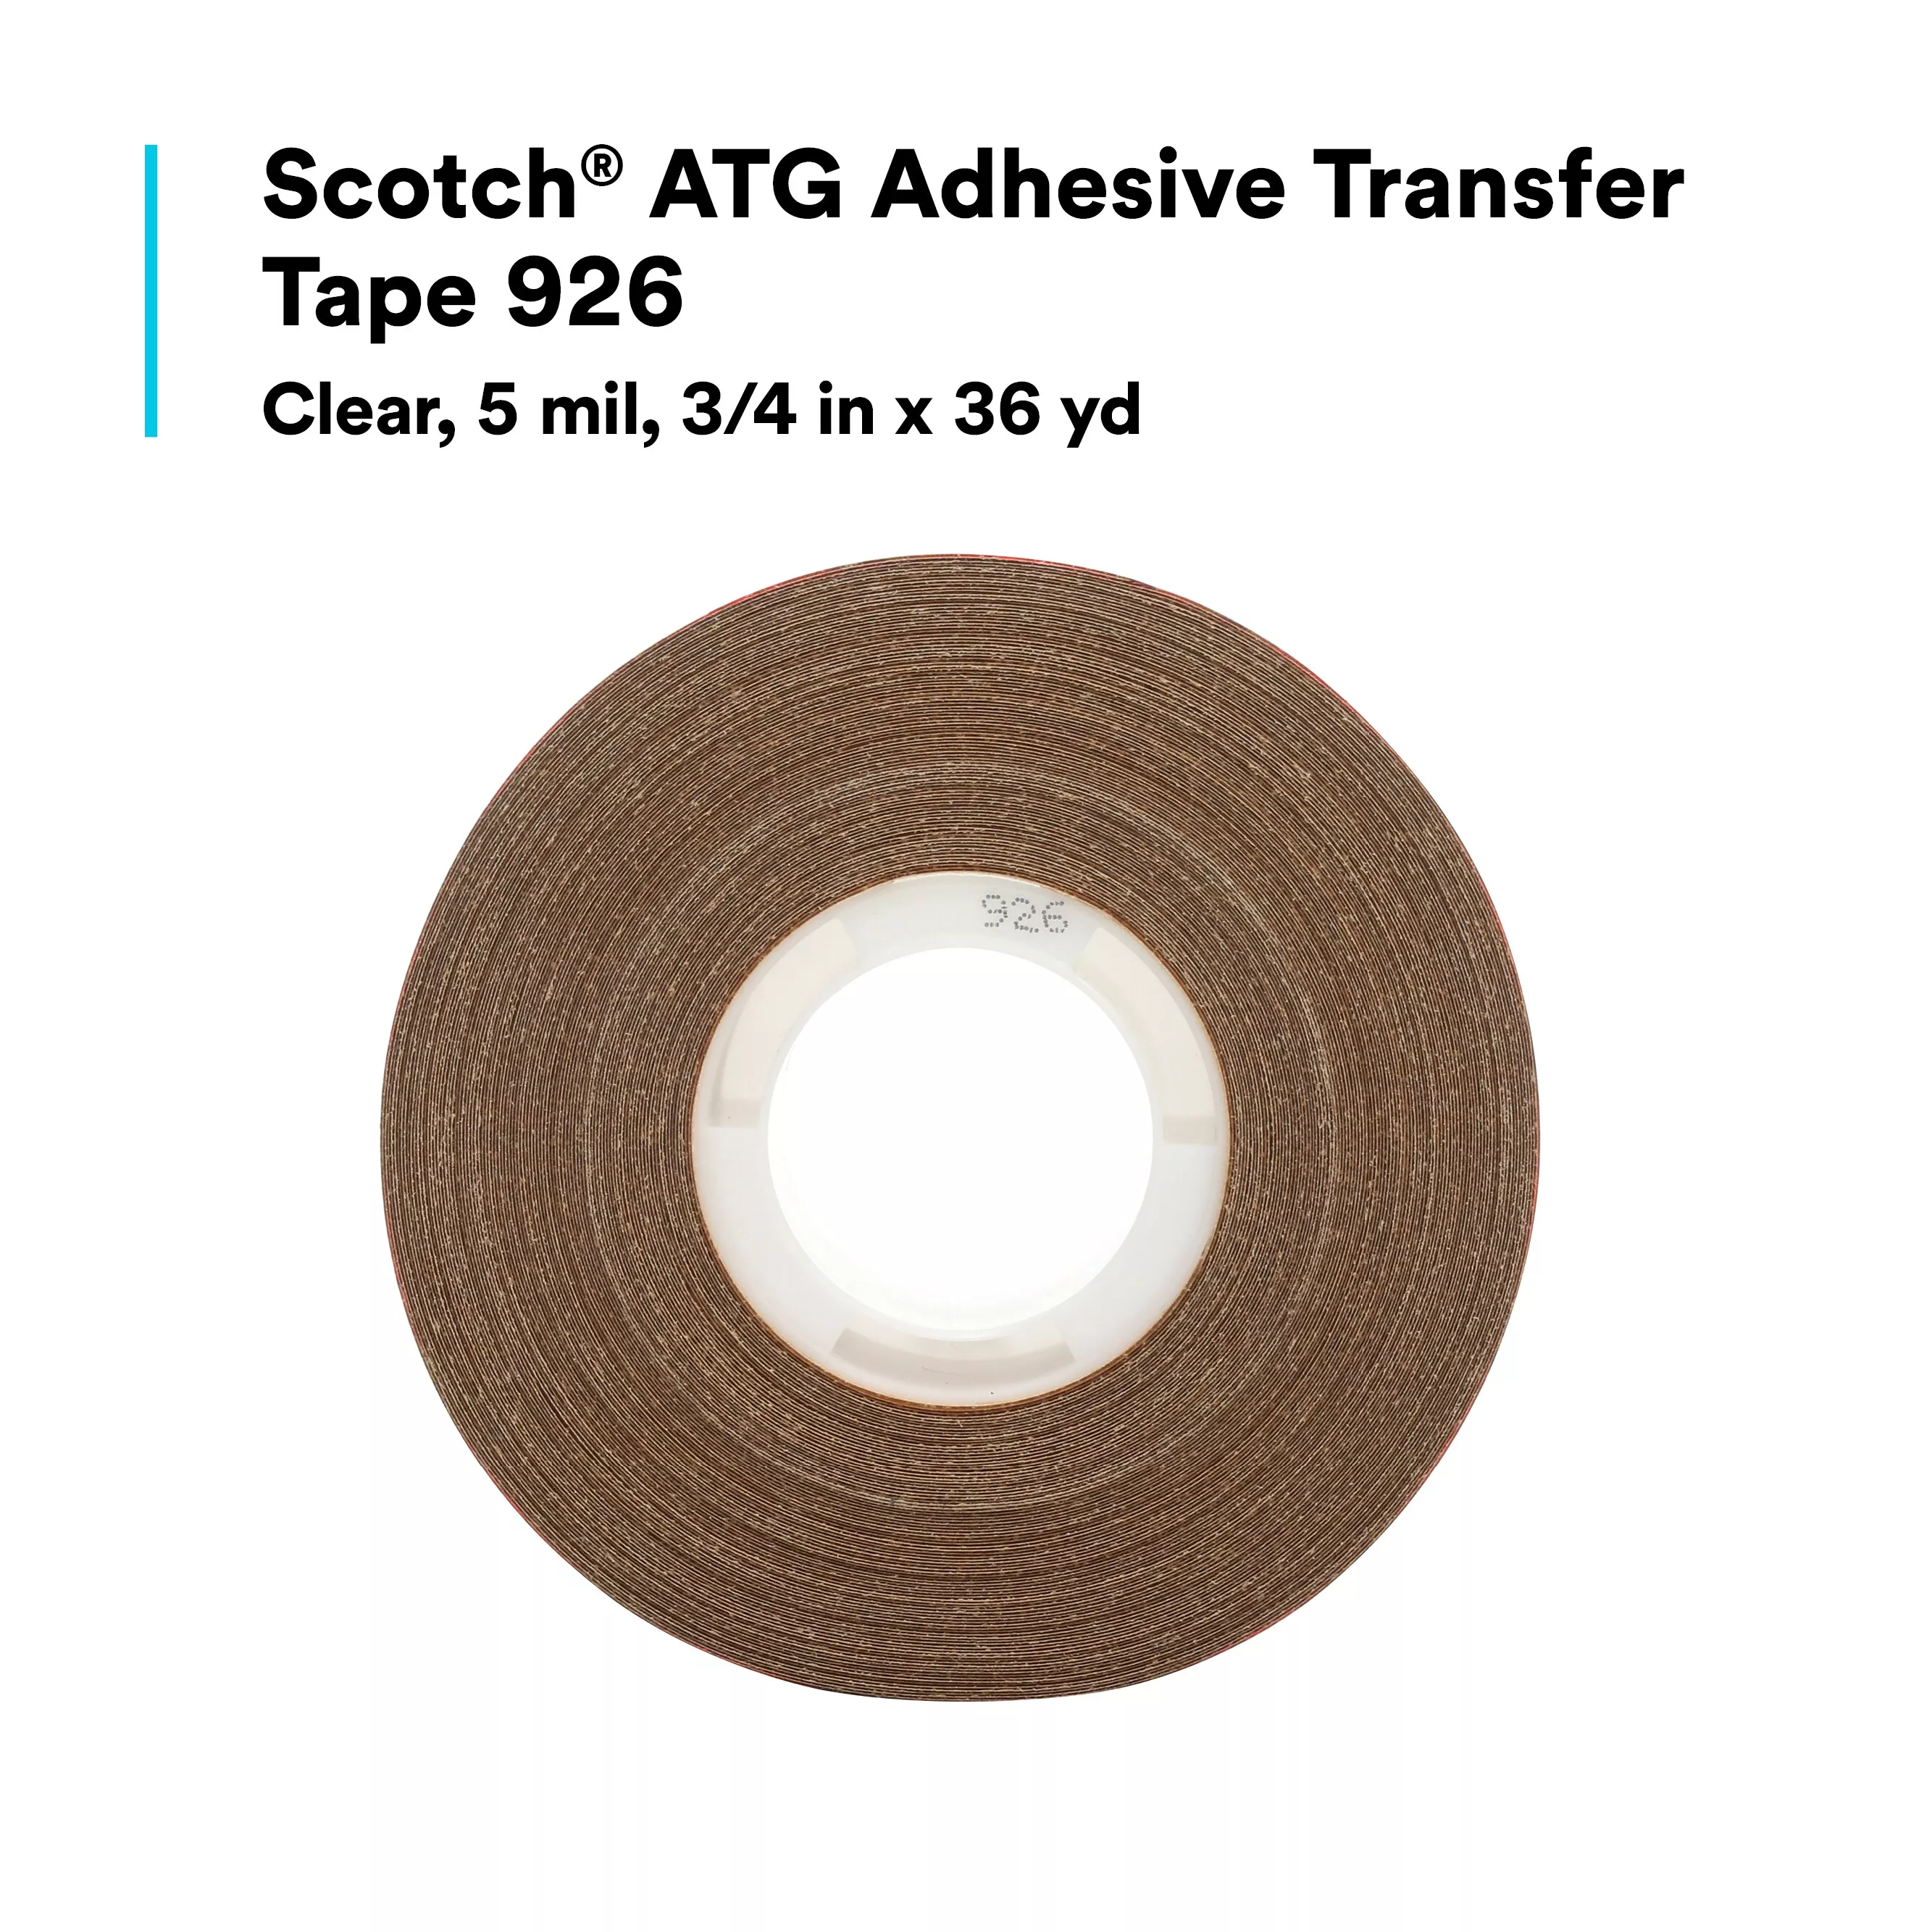 SKU 7000048495 | Scotch® ATG Adhesive Transfer Tape 926